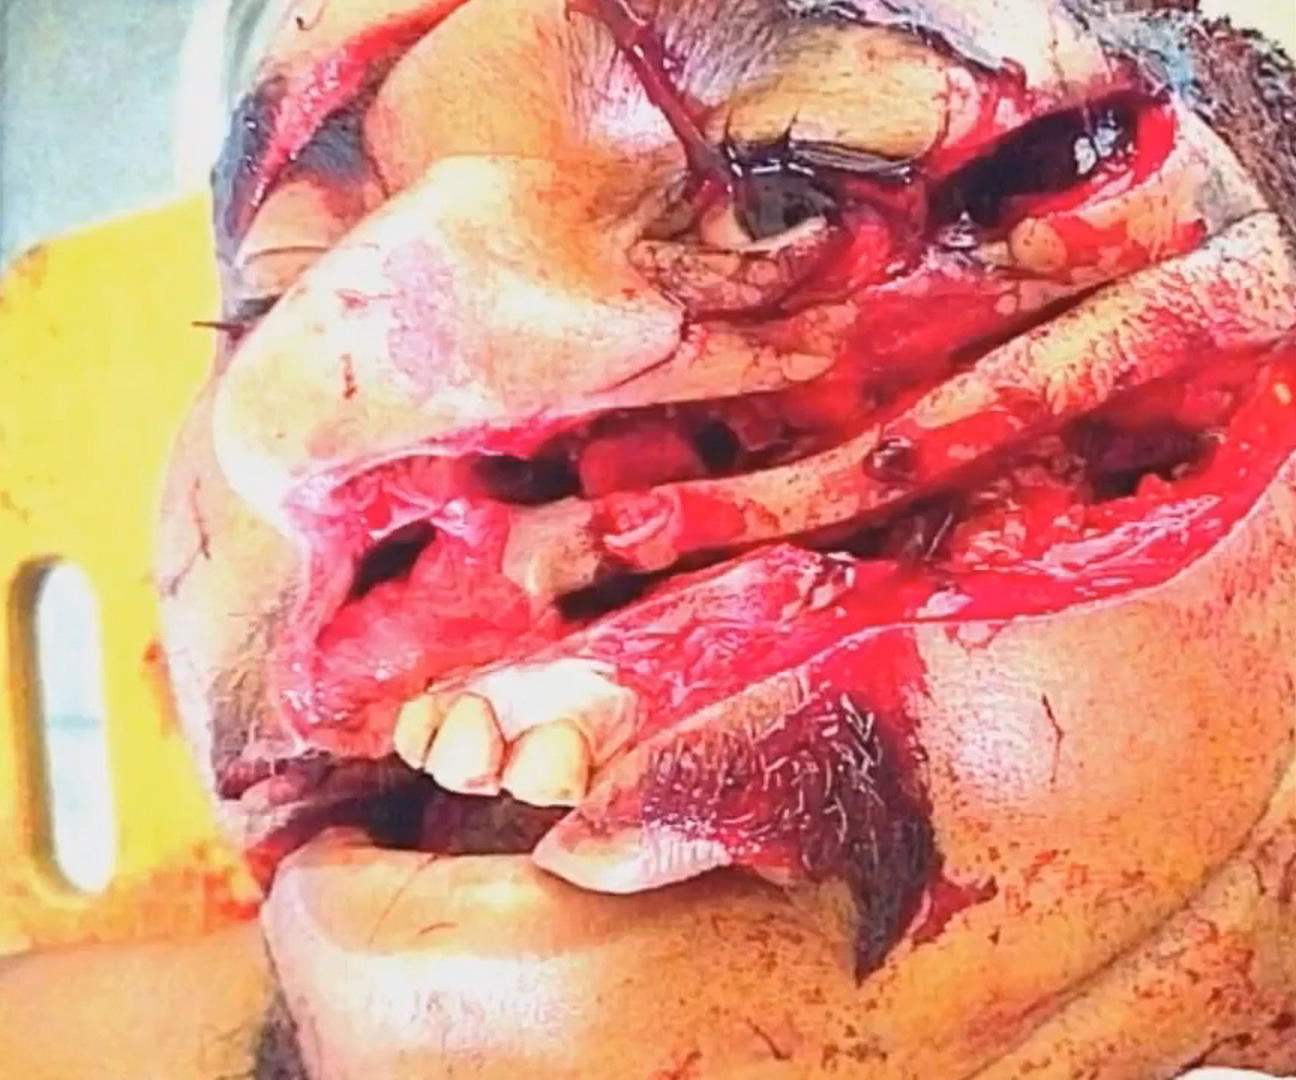 Machete marks on the victim's face